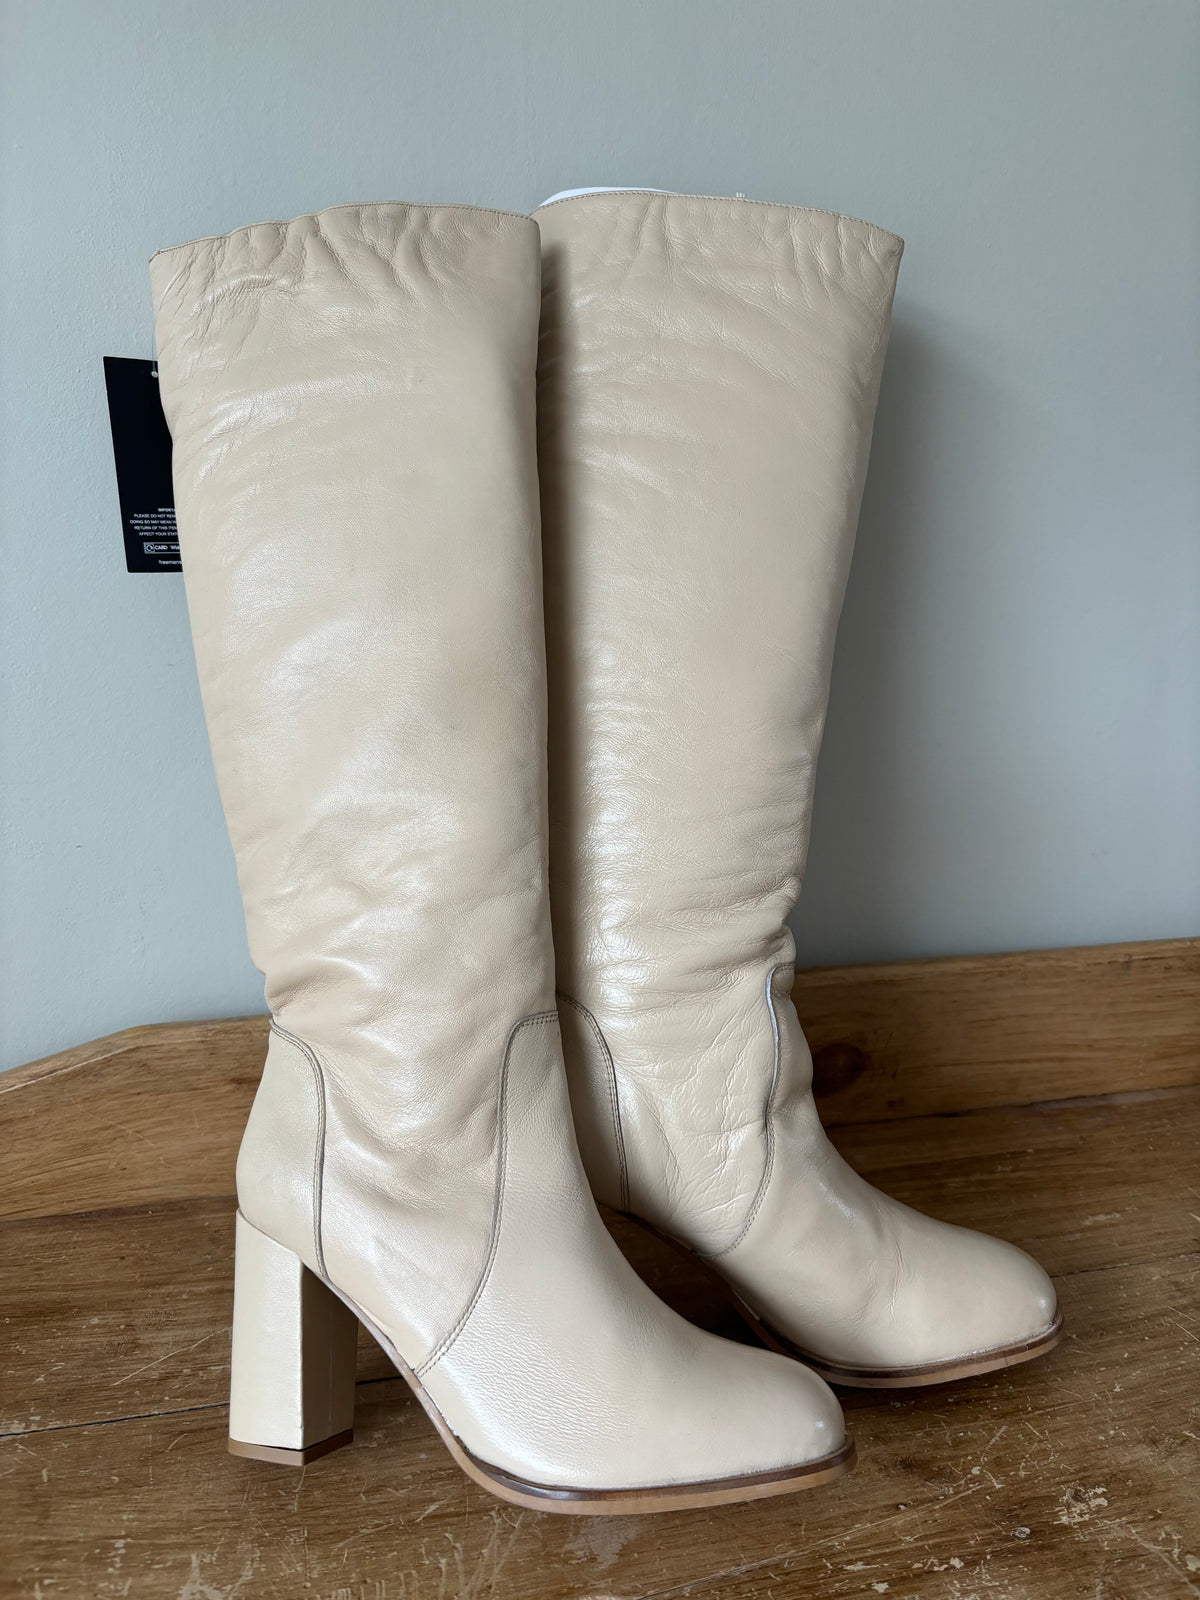 Kaleidoscope cream block heeled boots Size 5